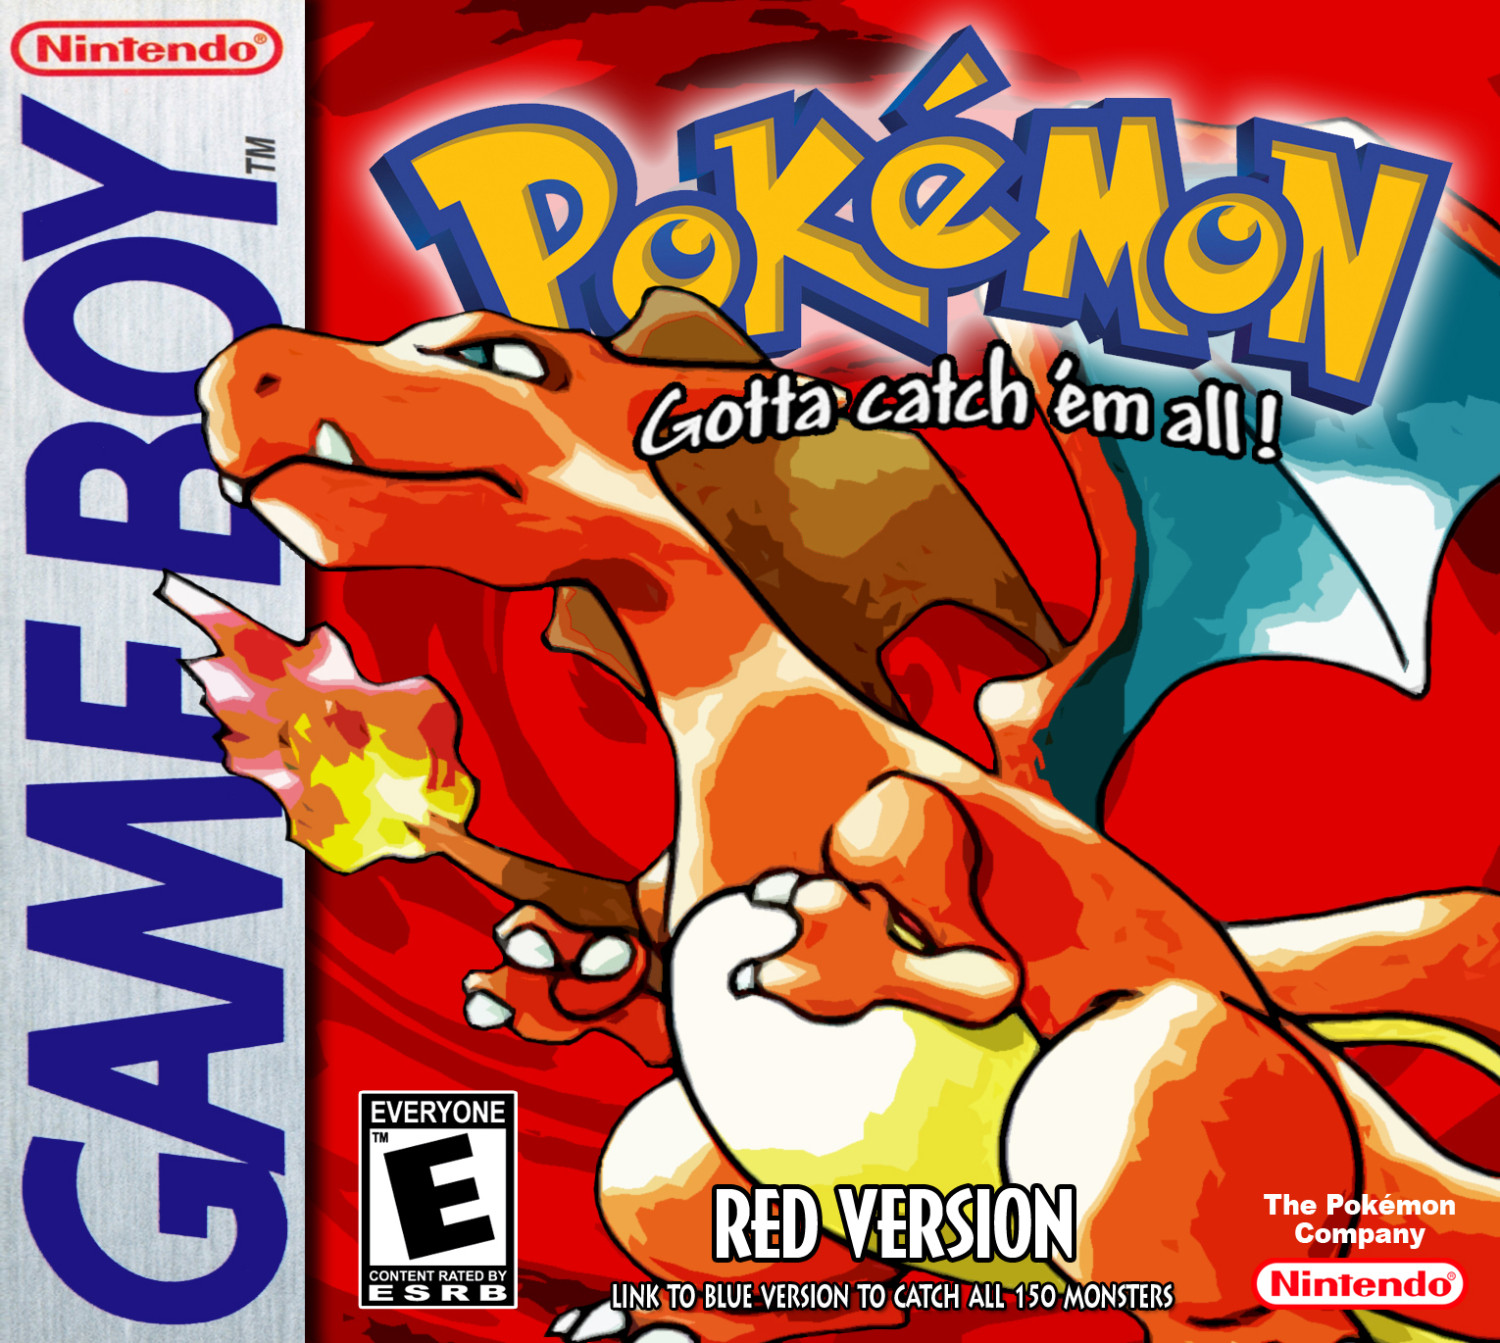 Review: Pokémon Red Version Pure Nintendo